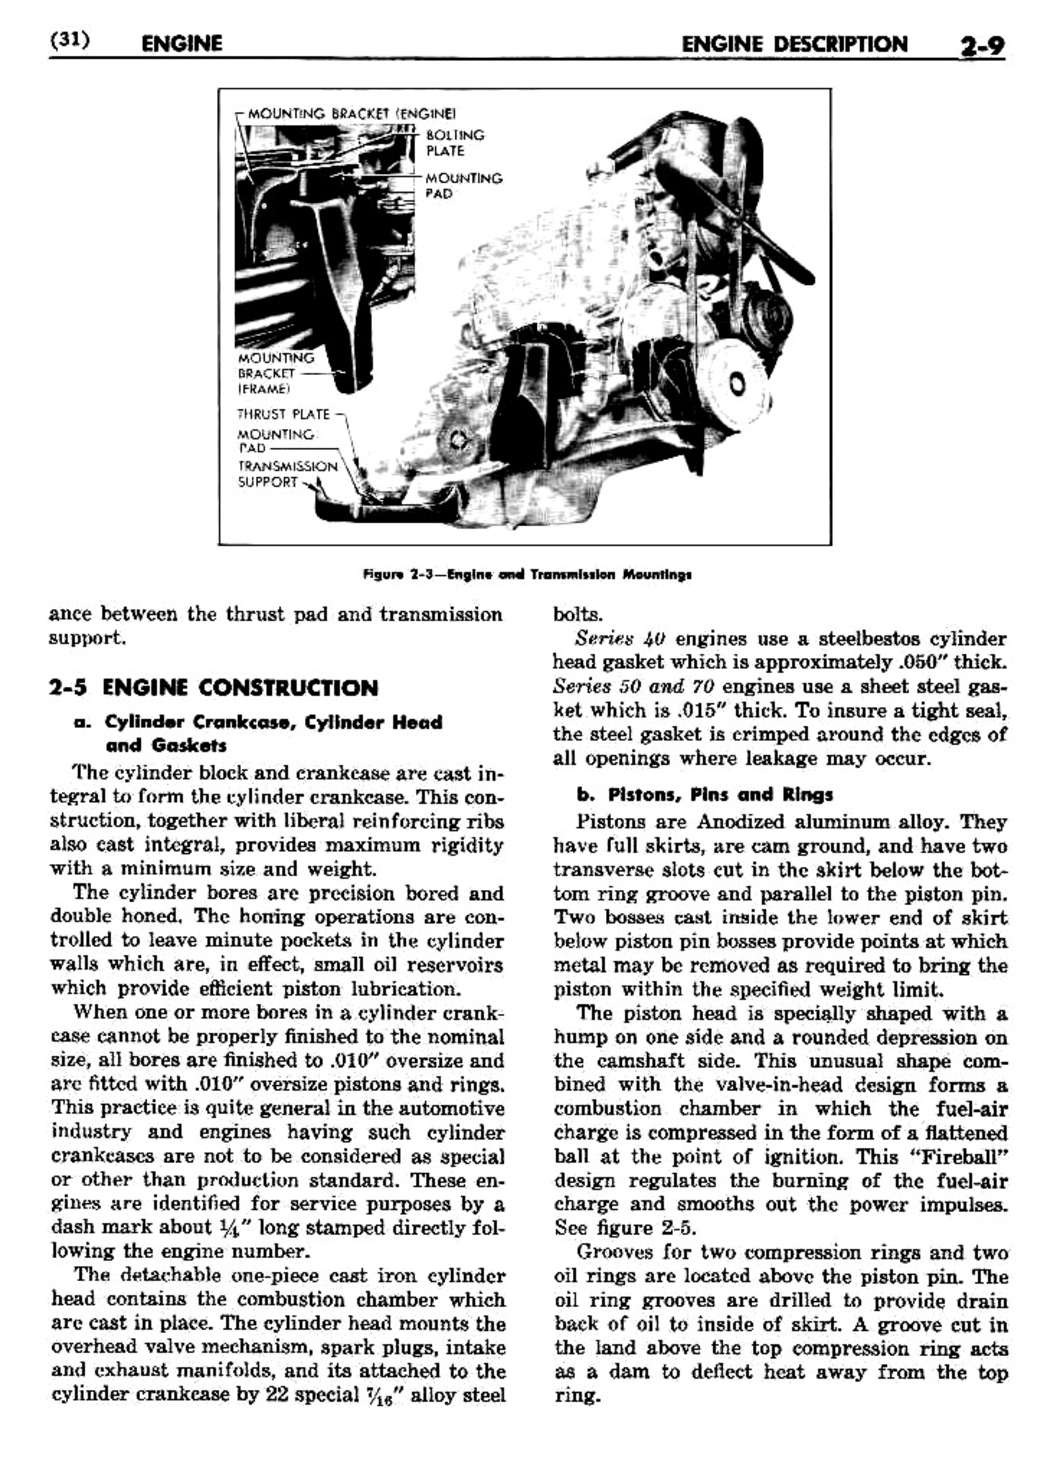 n_03 1948 Buick Shop Manual - Engine-009-009.jpg